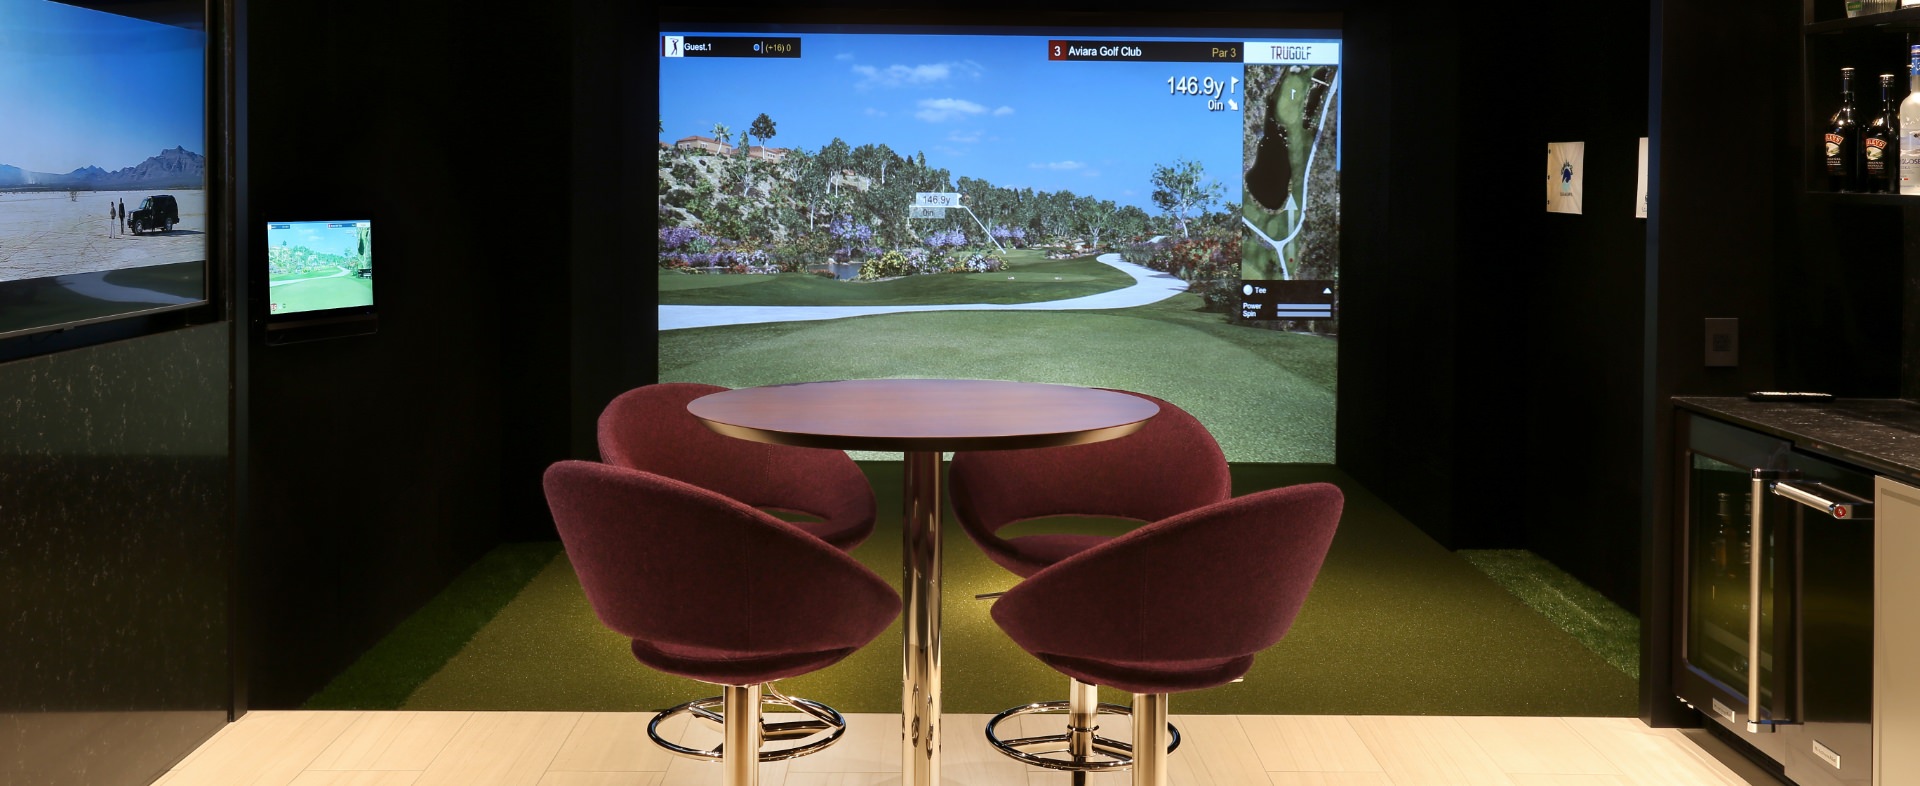 golf_simulator_home